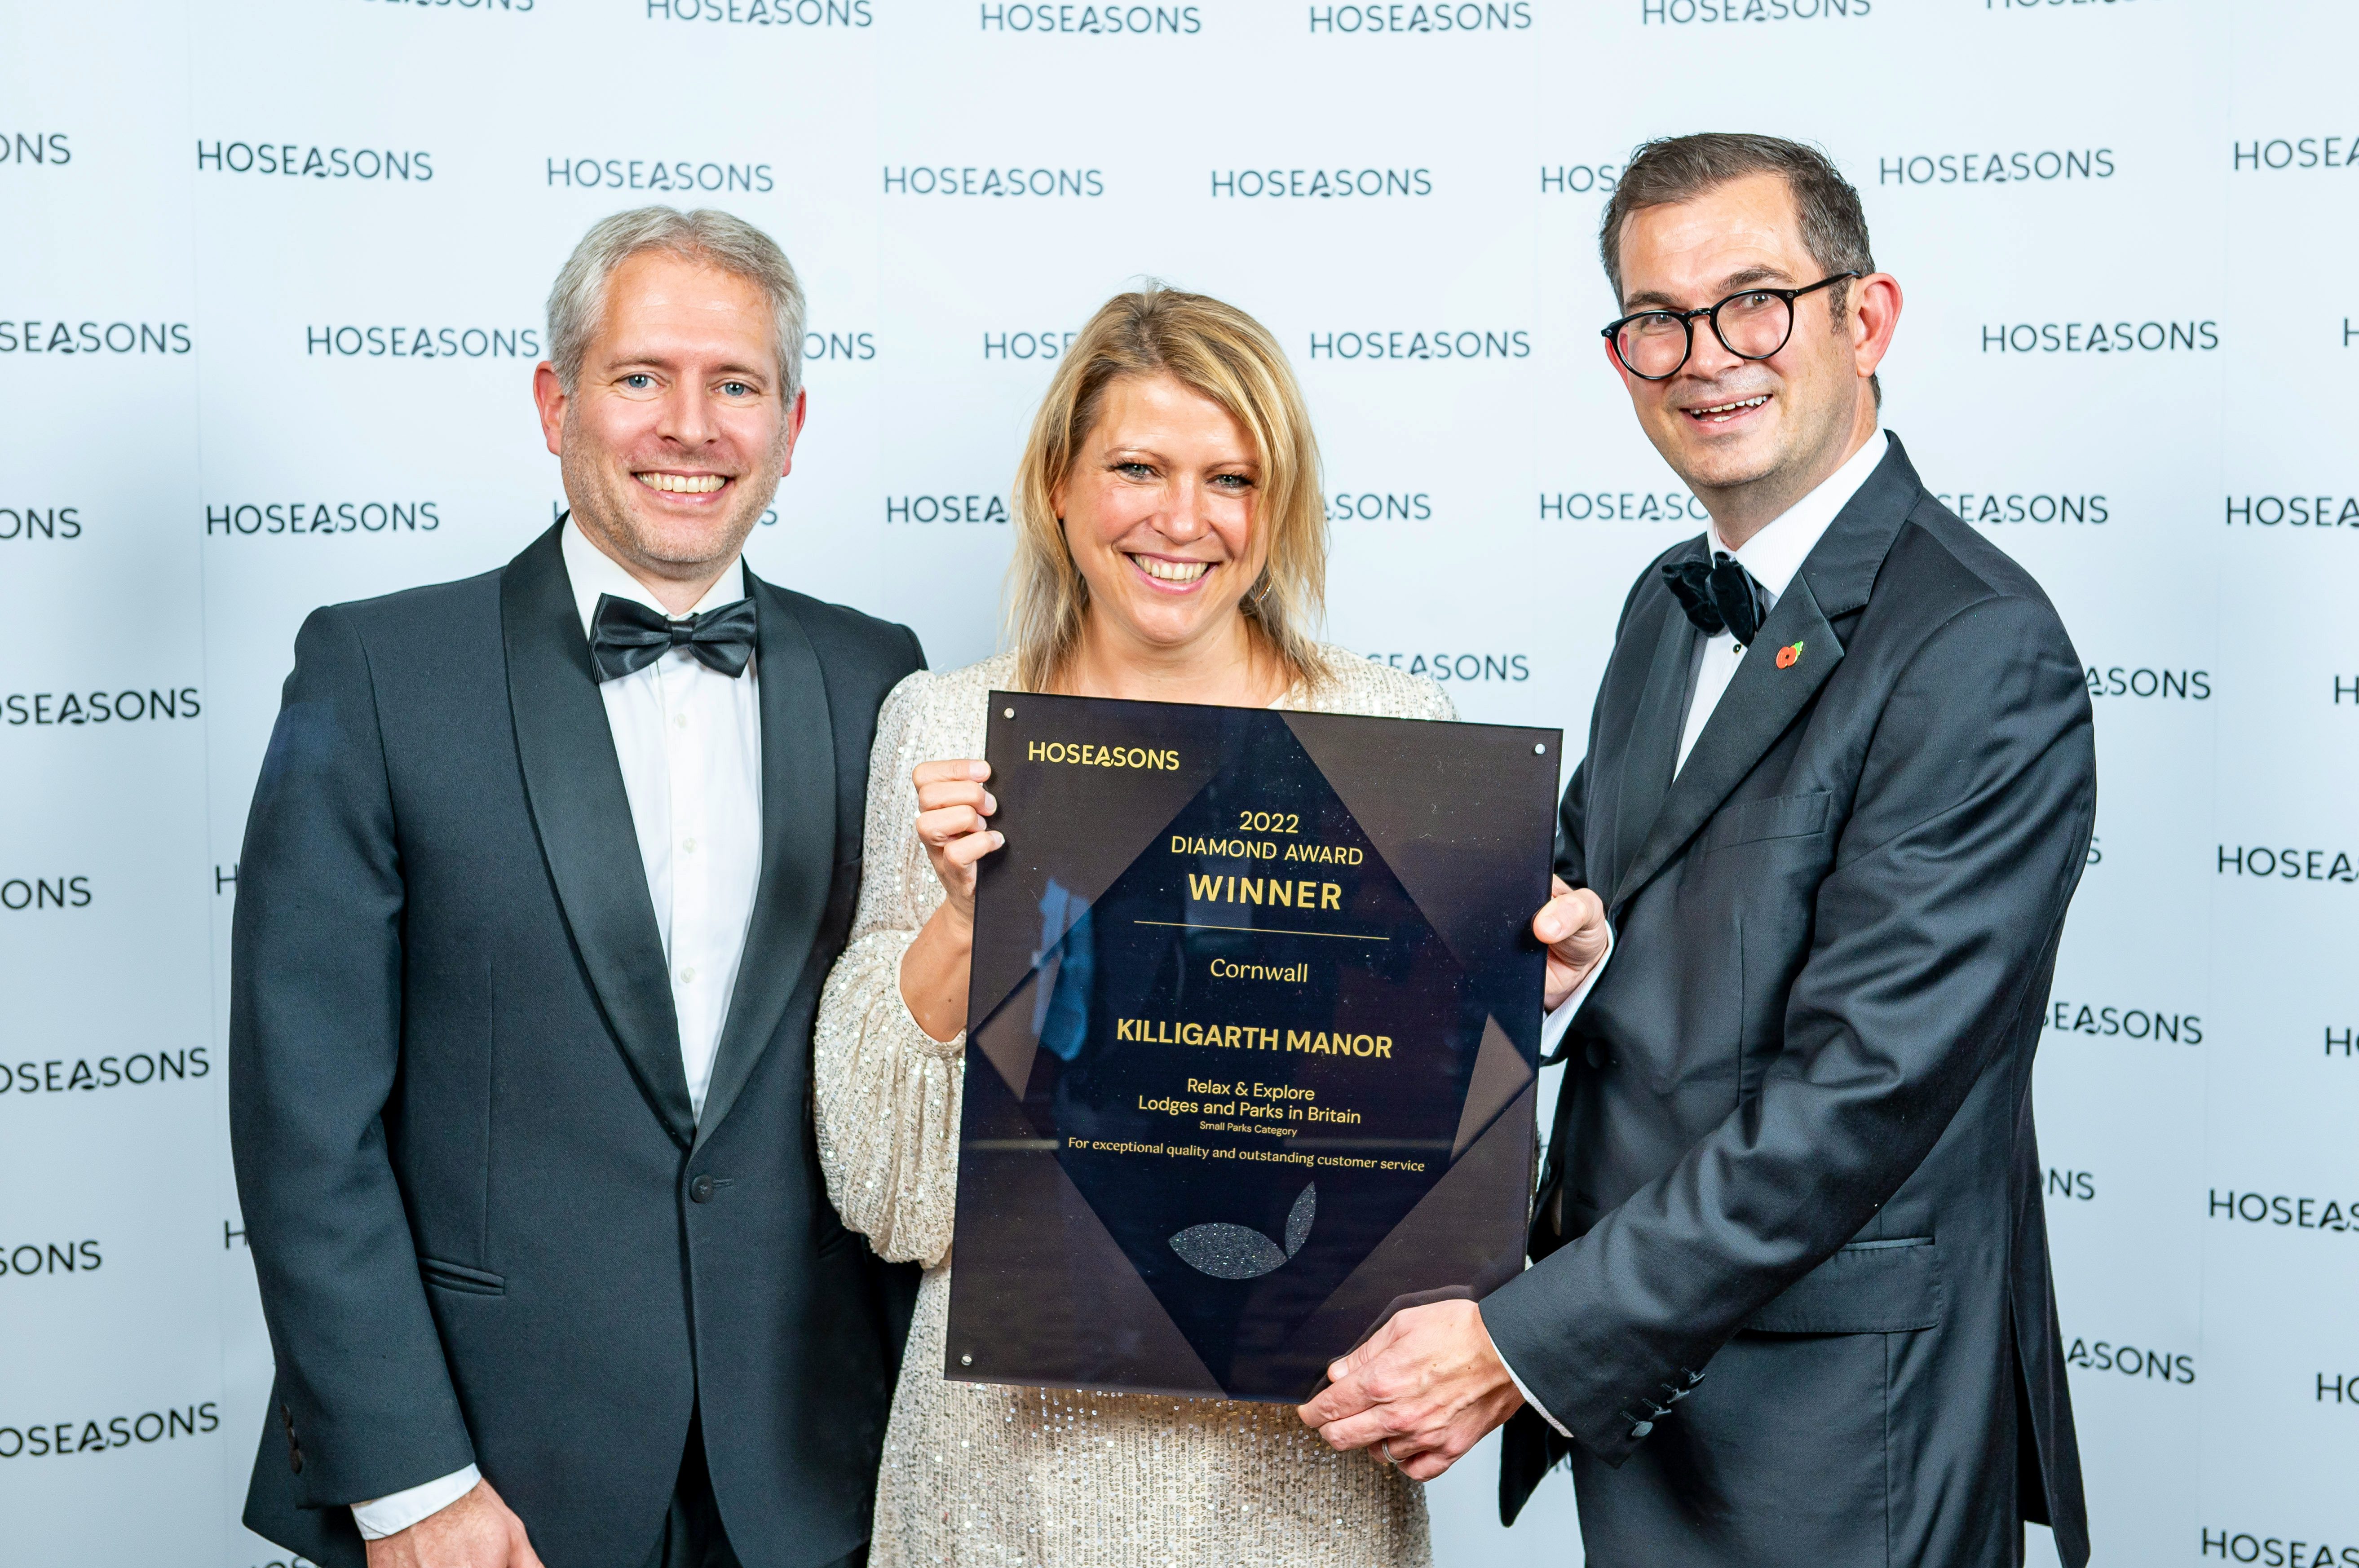 Killigarth Manor win Hoseasons Diamond Award